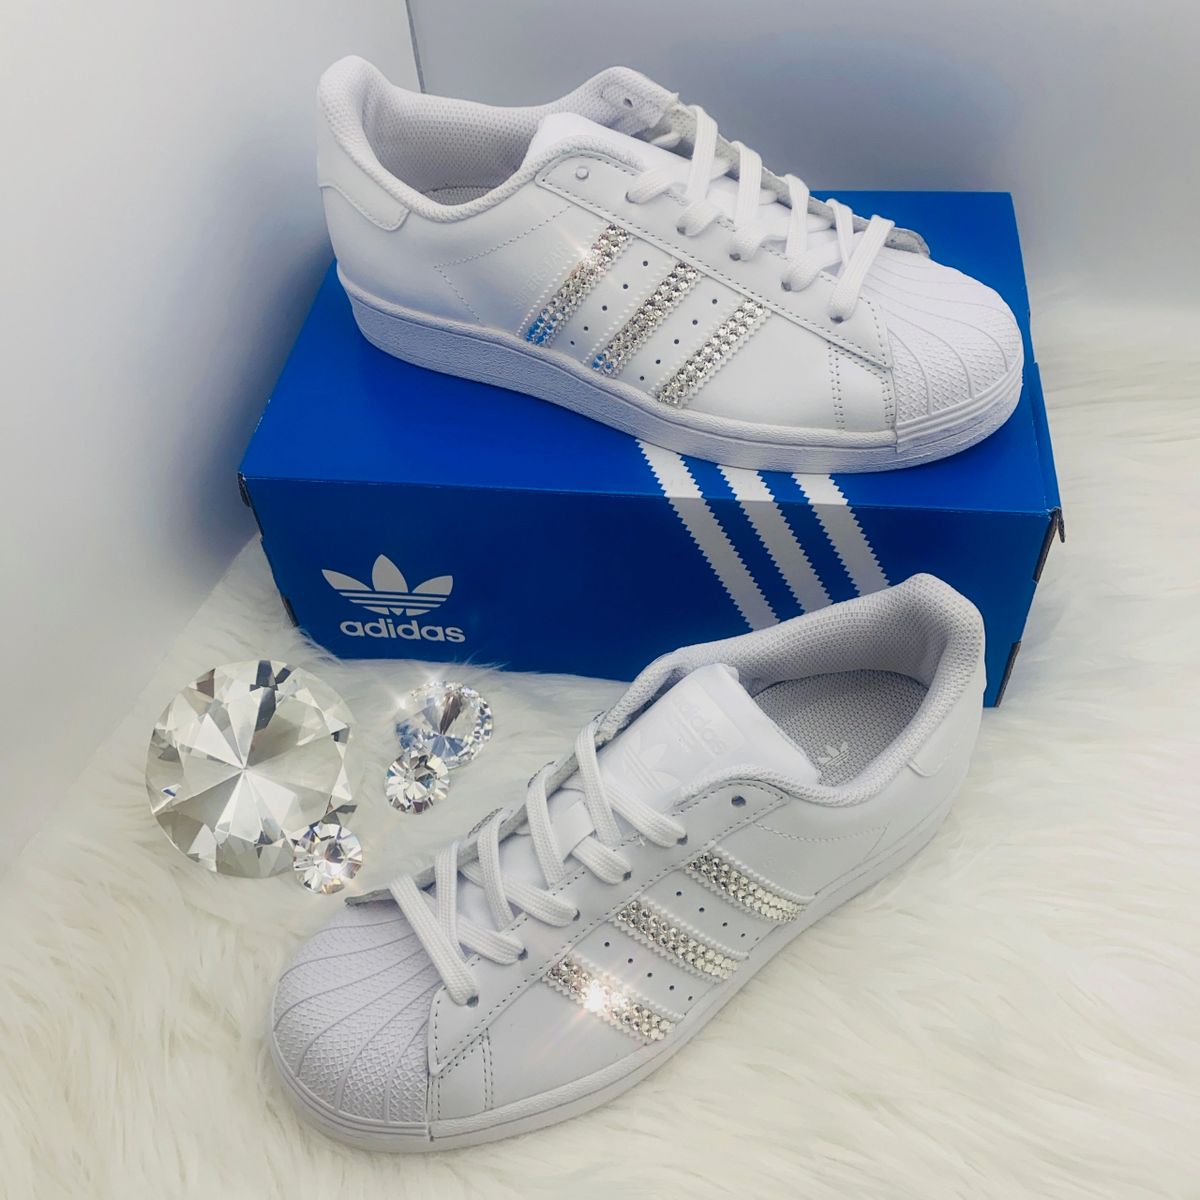 Swarovski Bling Adidas Superstar Shoes - All White